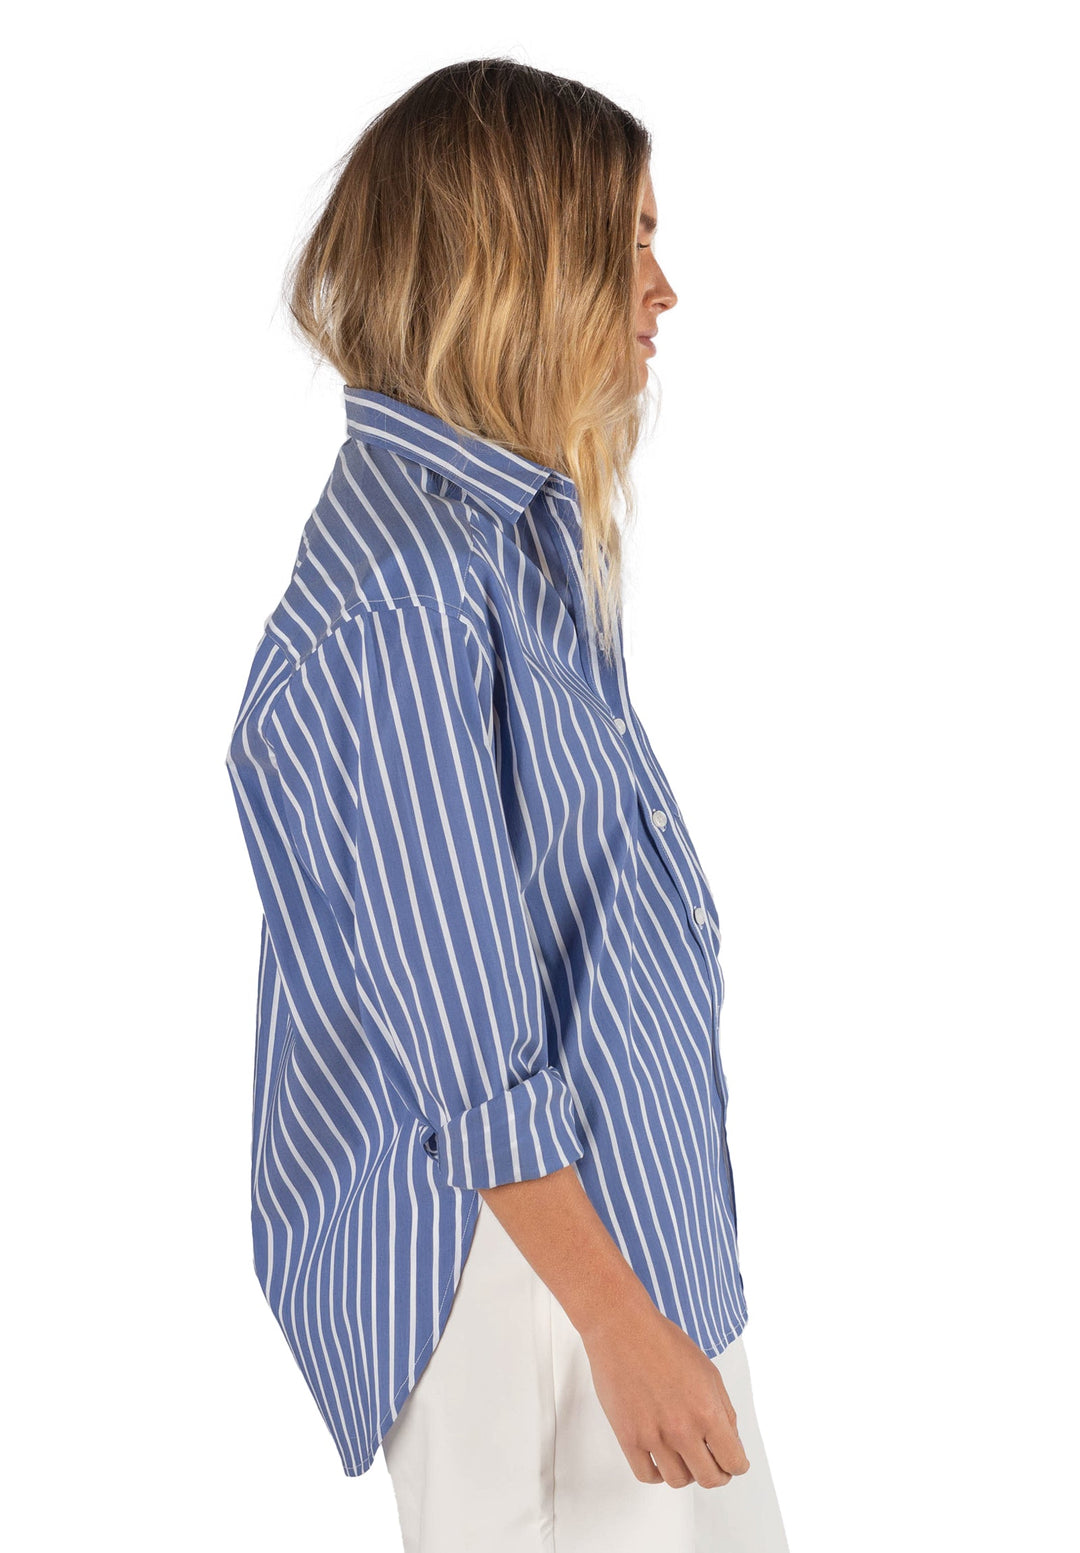 Poppy Dark Blue Stripes Oversize Cotton Shirt